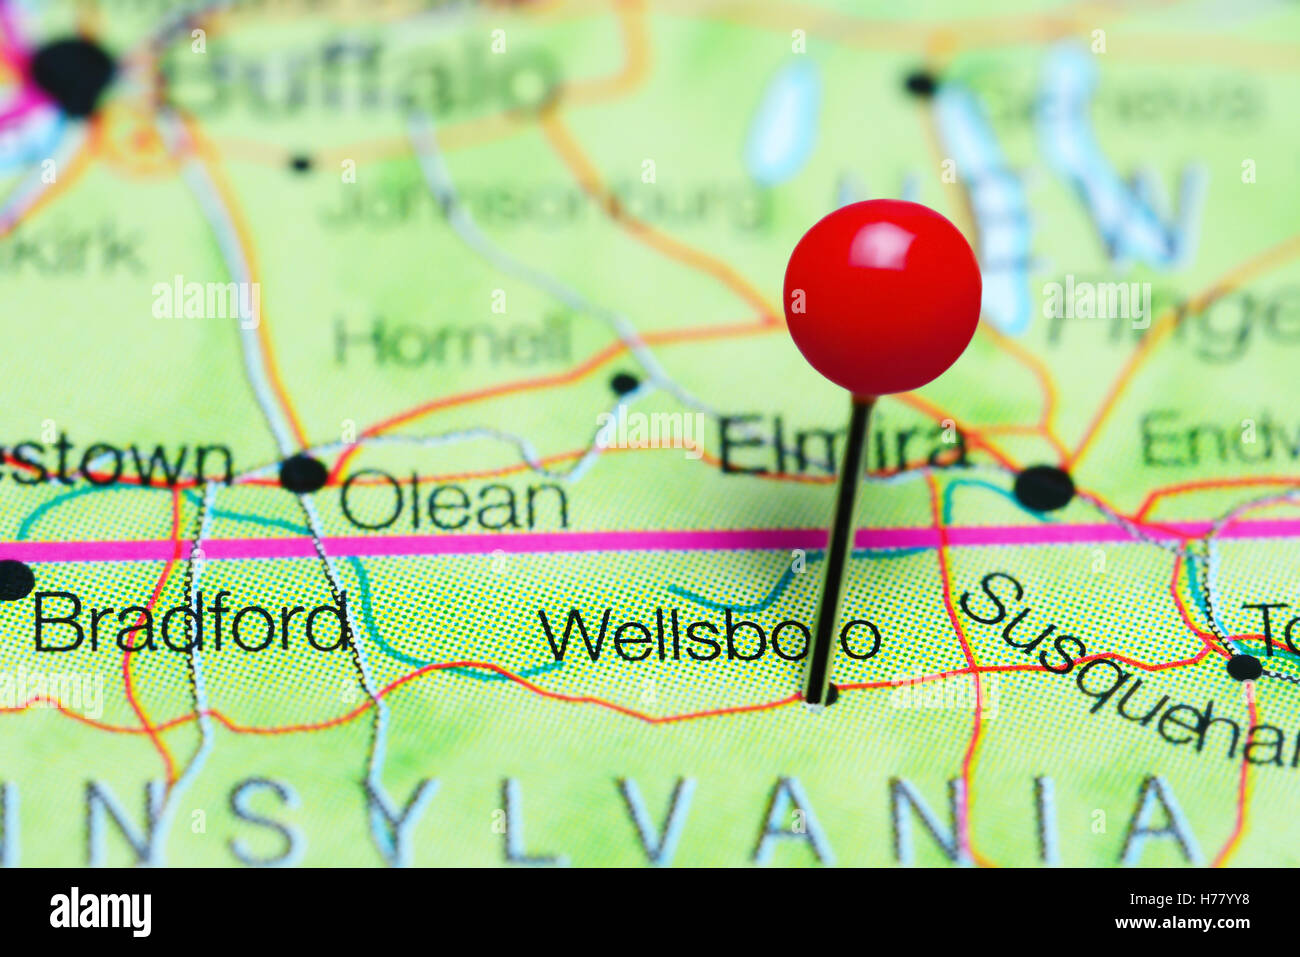 Wellsboro pinned on a map of Pennsylvania, USA Stock Photo